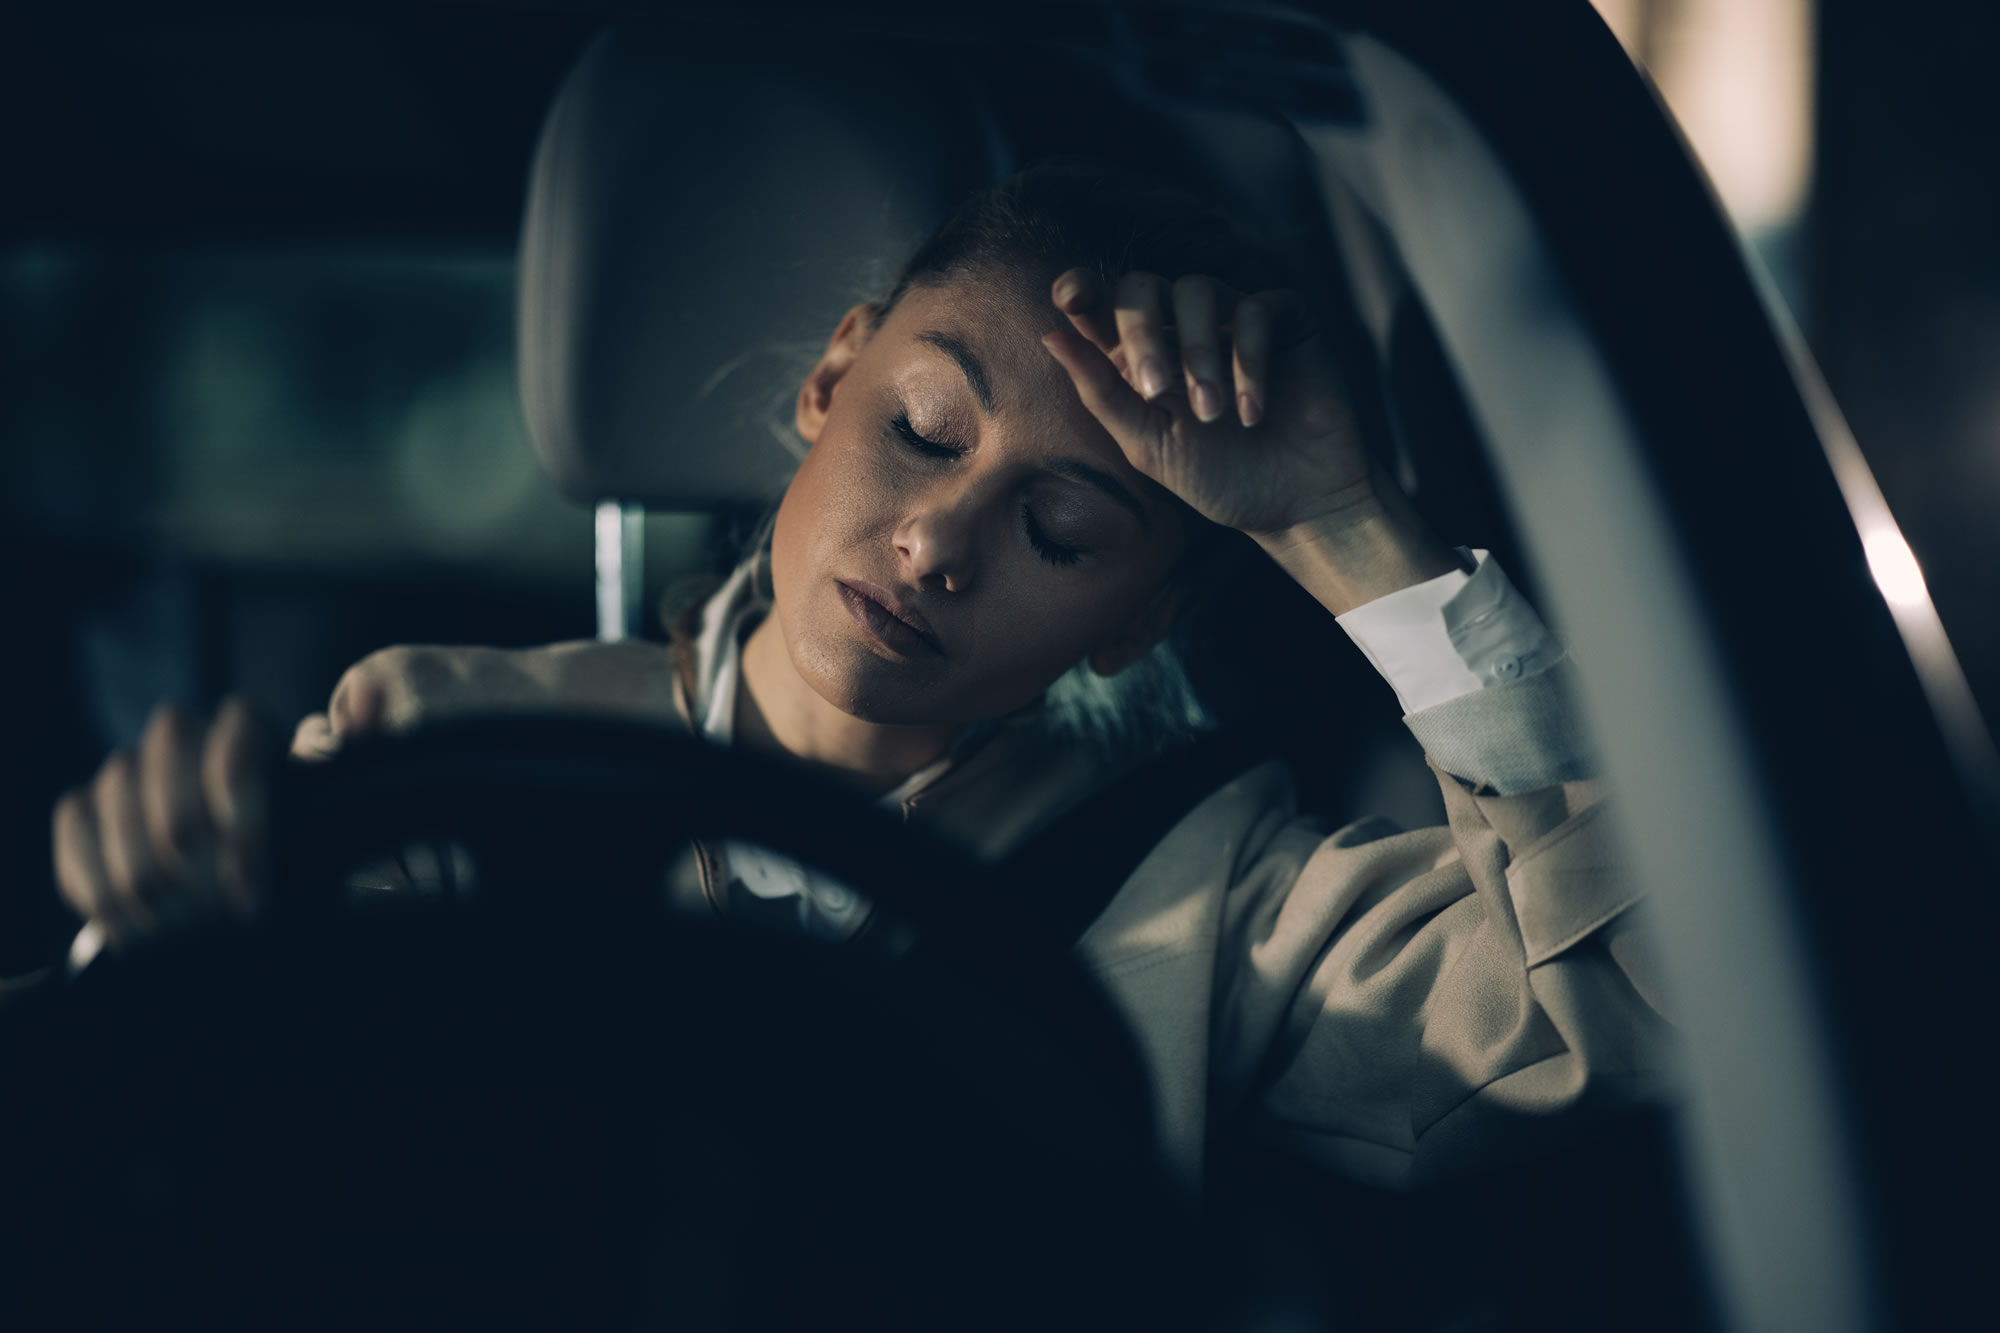 drowsy-driving